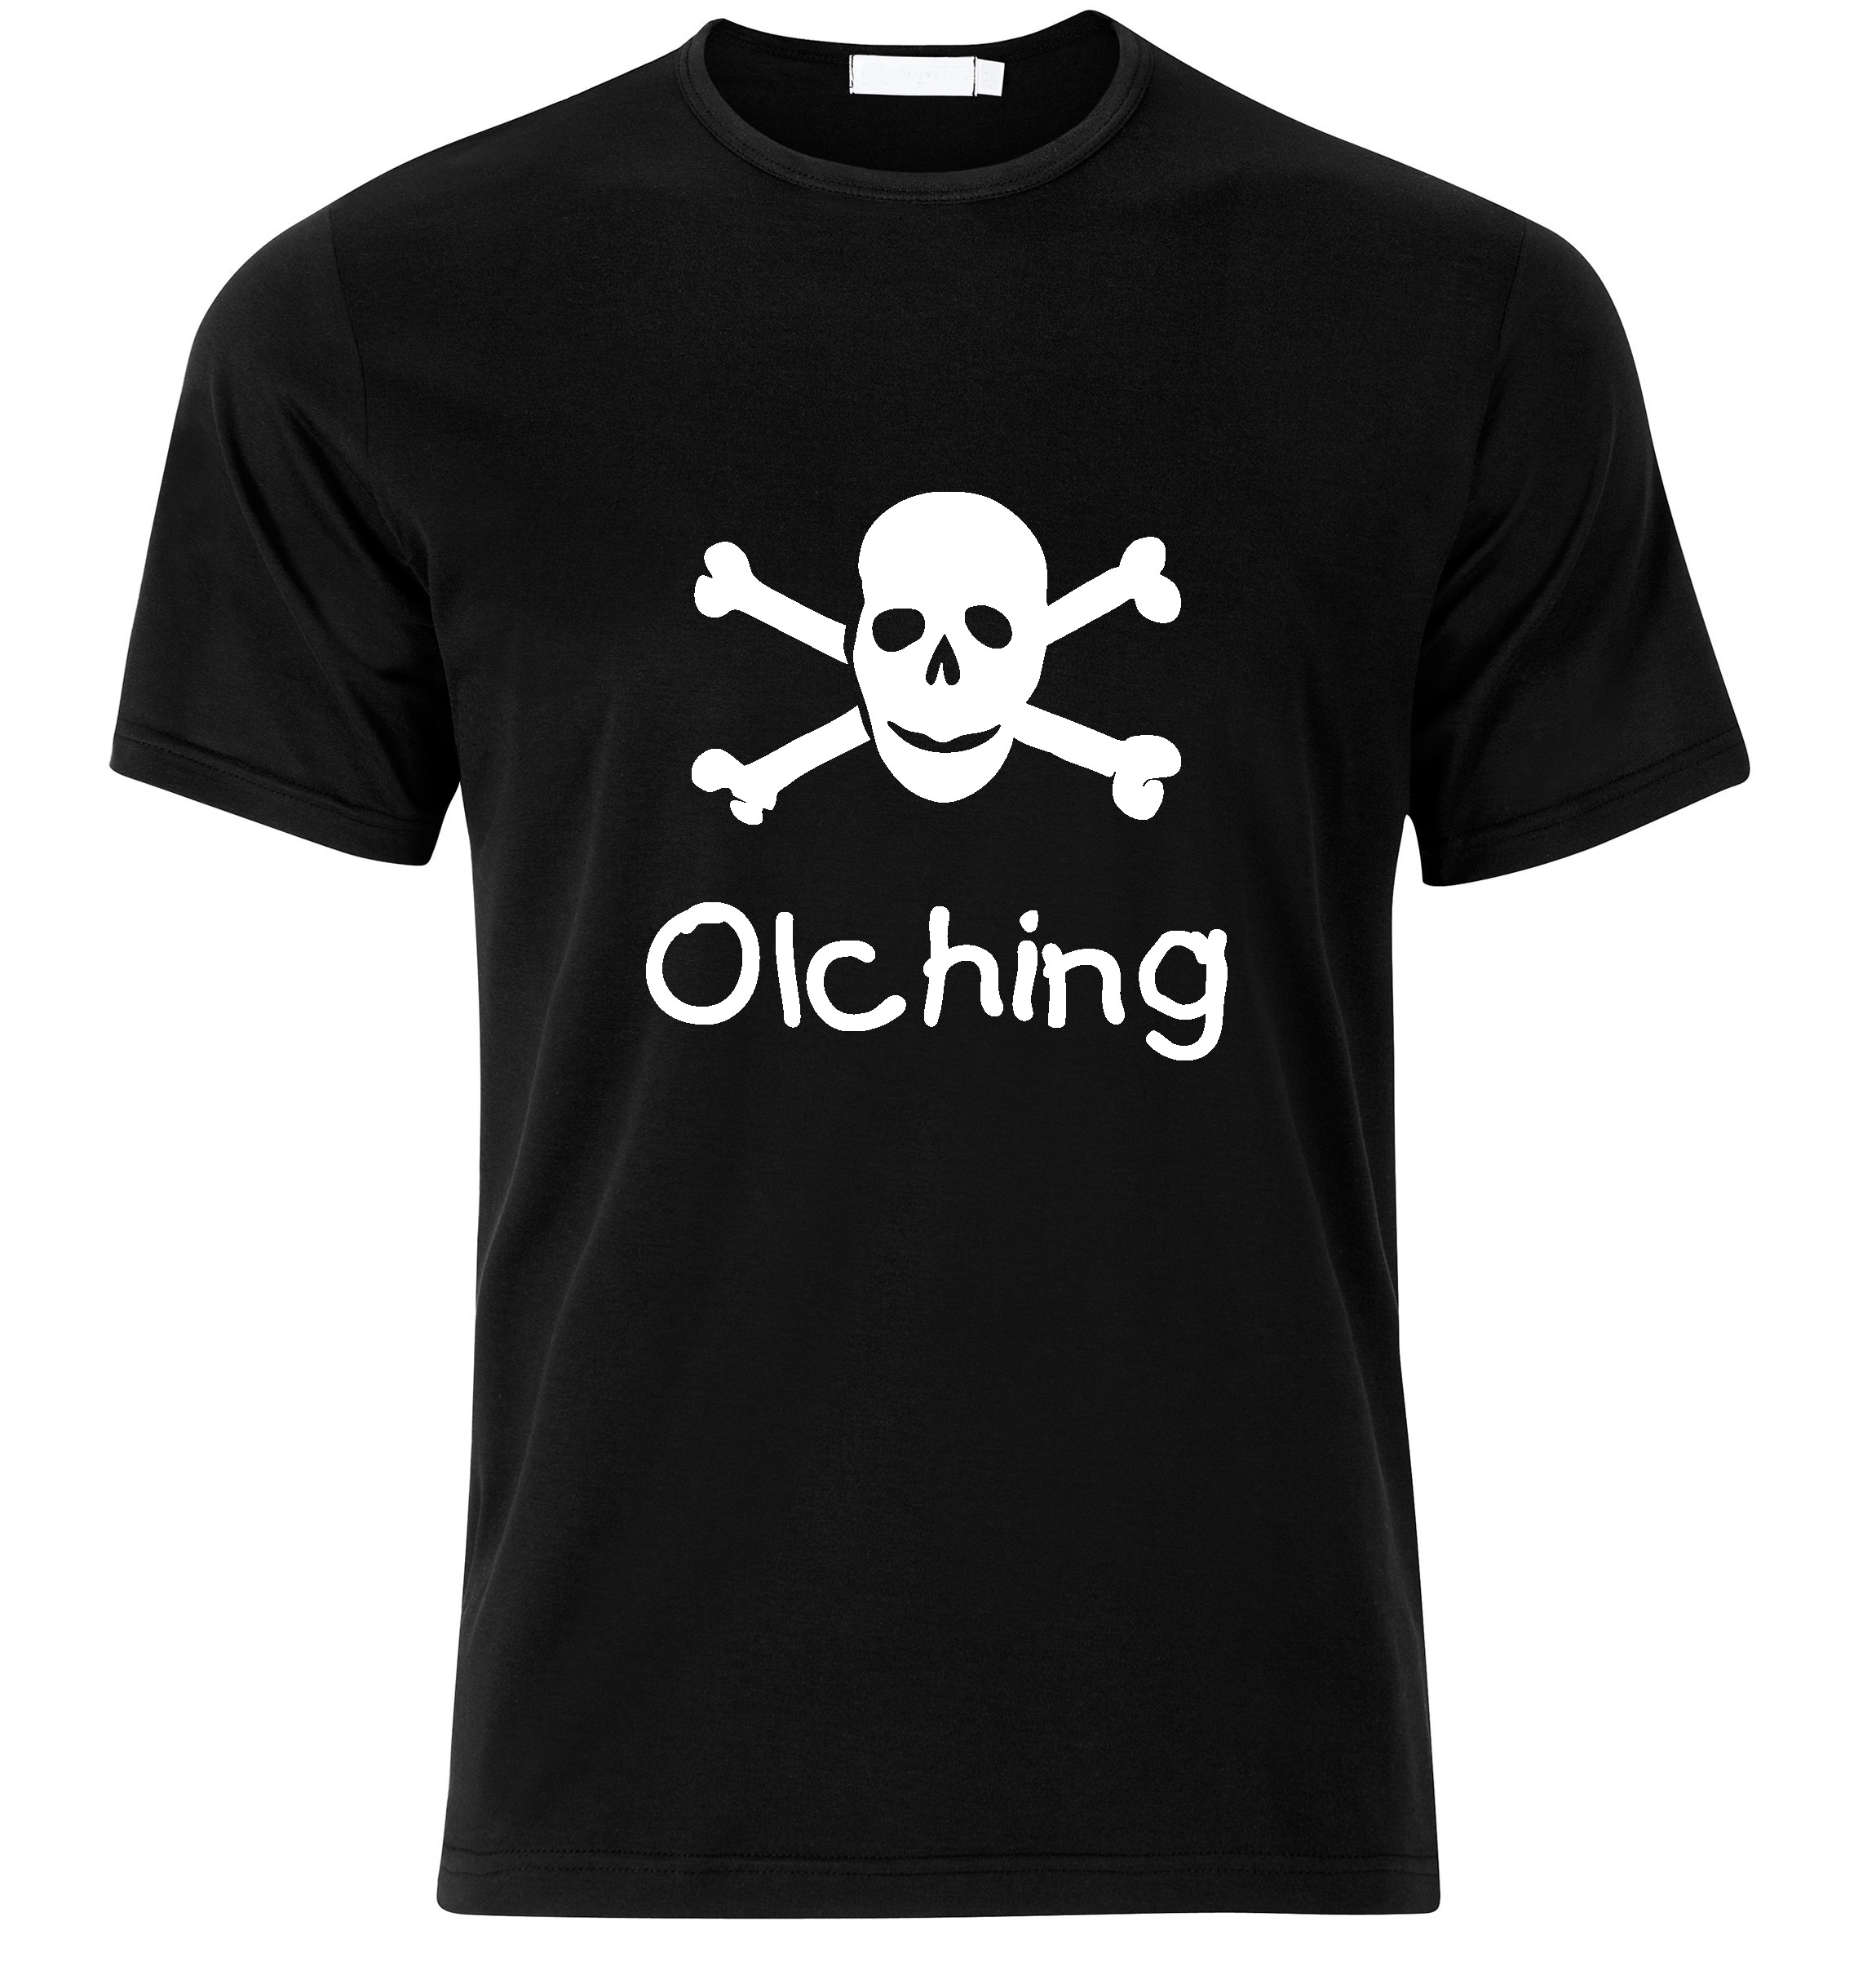 T-Shirt Olching Jolly Roger, Totenkopf